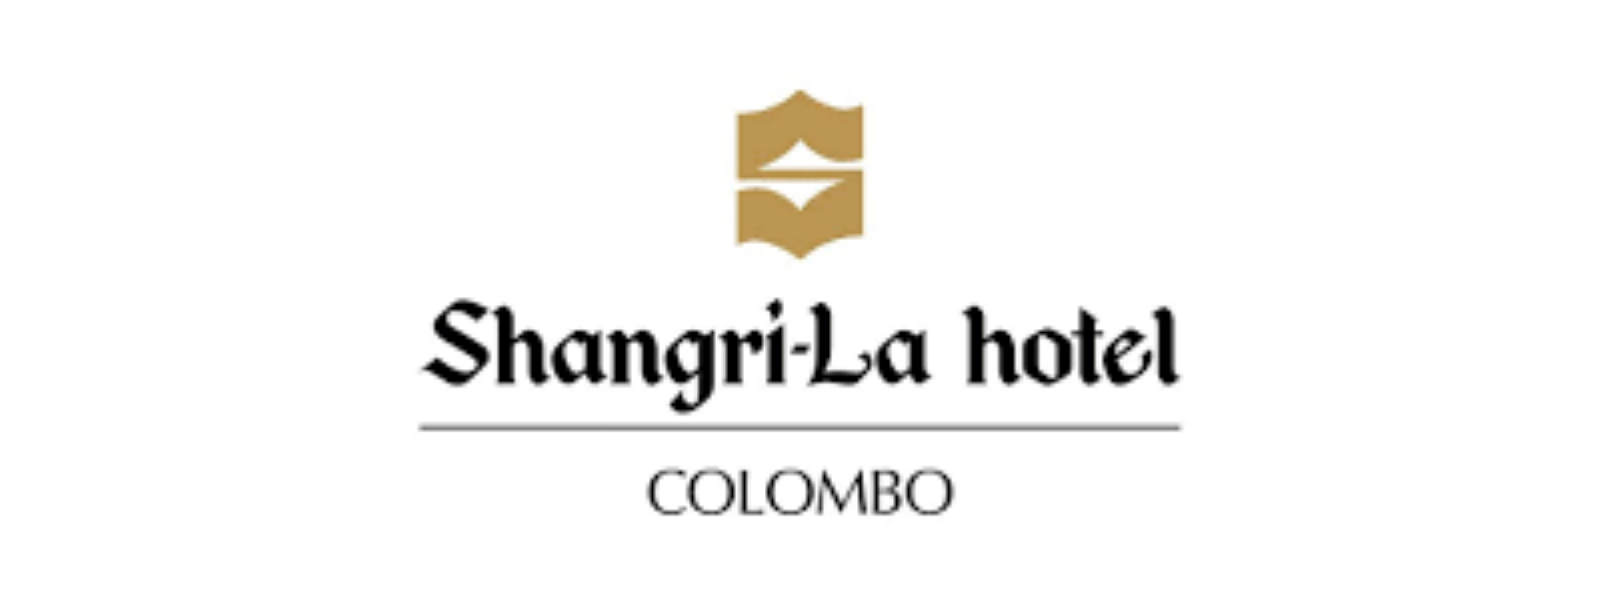 Shangri-La Hotel closed until further notice